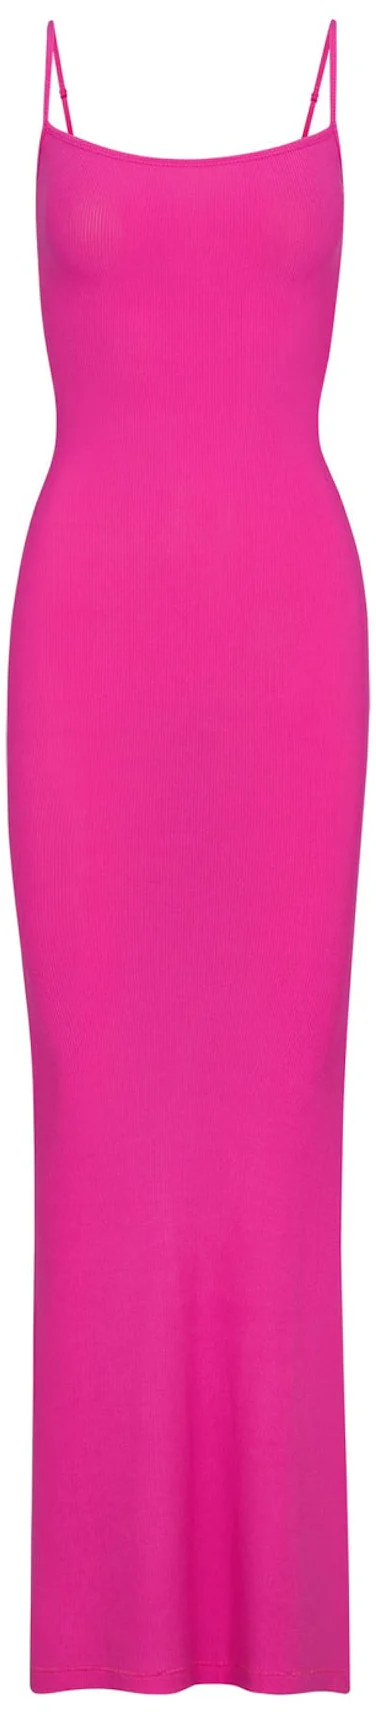 Track Soft Lounge Lace Slip Dress - Rose Print - XL at Skims